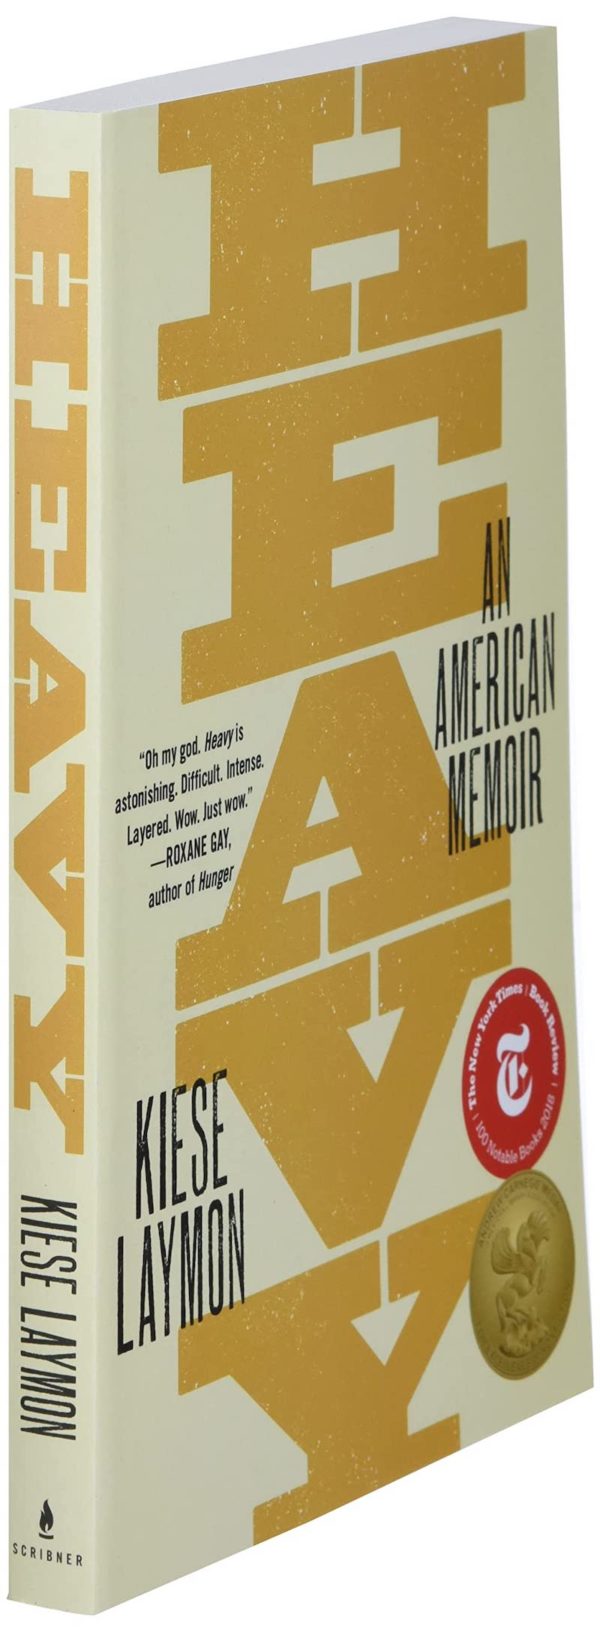 Heavy: An American Memoir by Kiese Laymon - Paperback